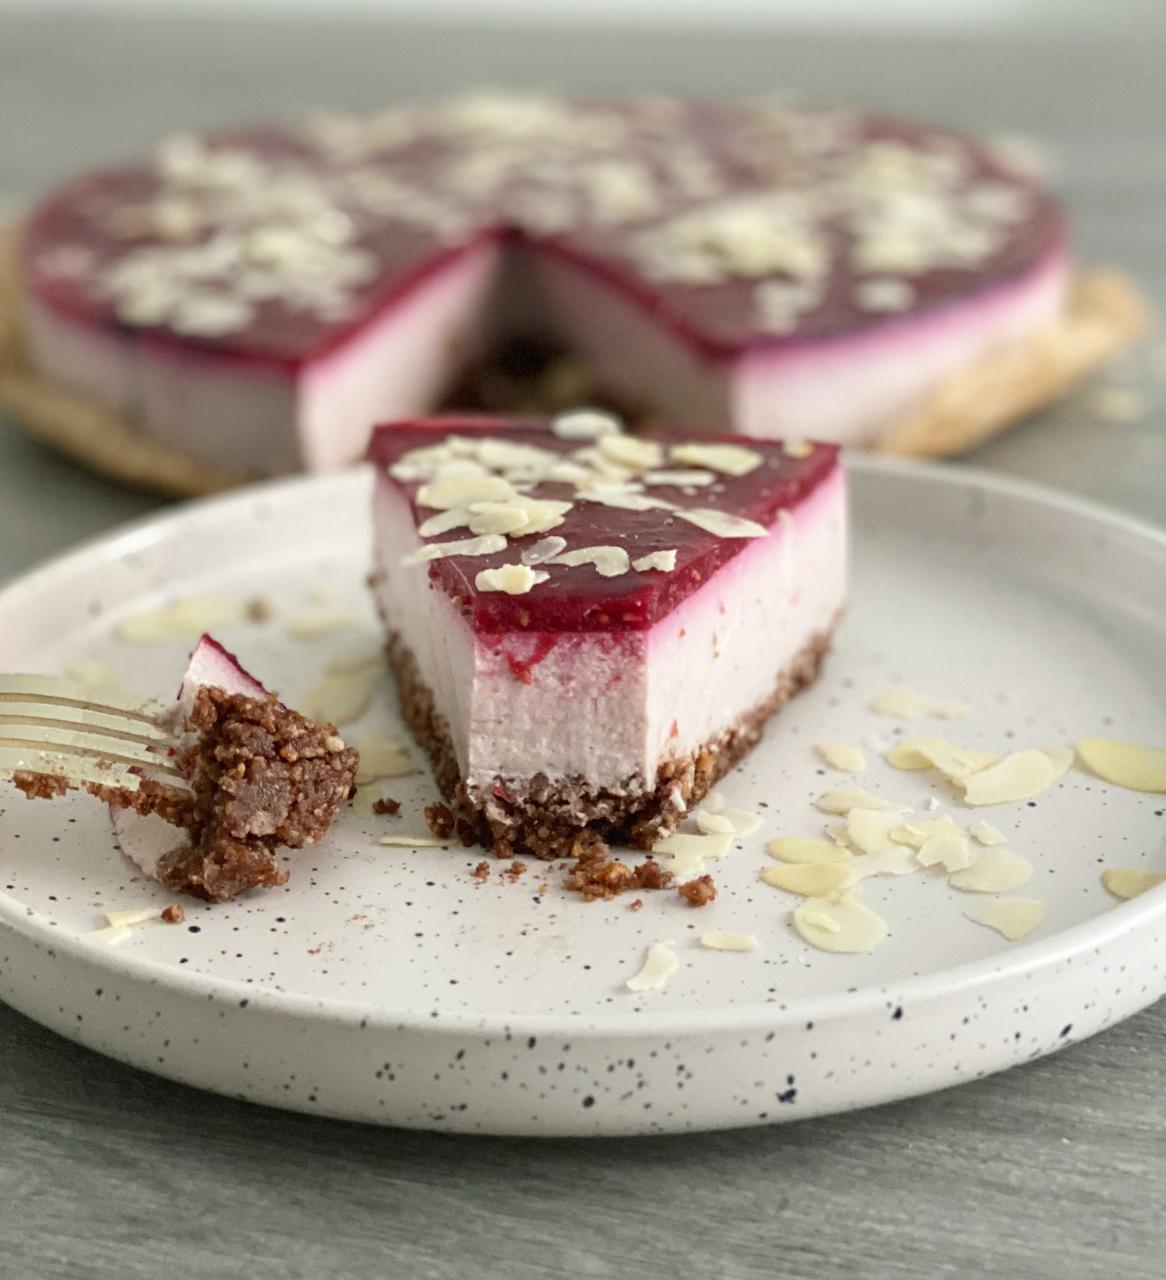 Cheesecake recept met frambozen (no-bake) - Helle Detavernier